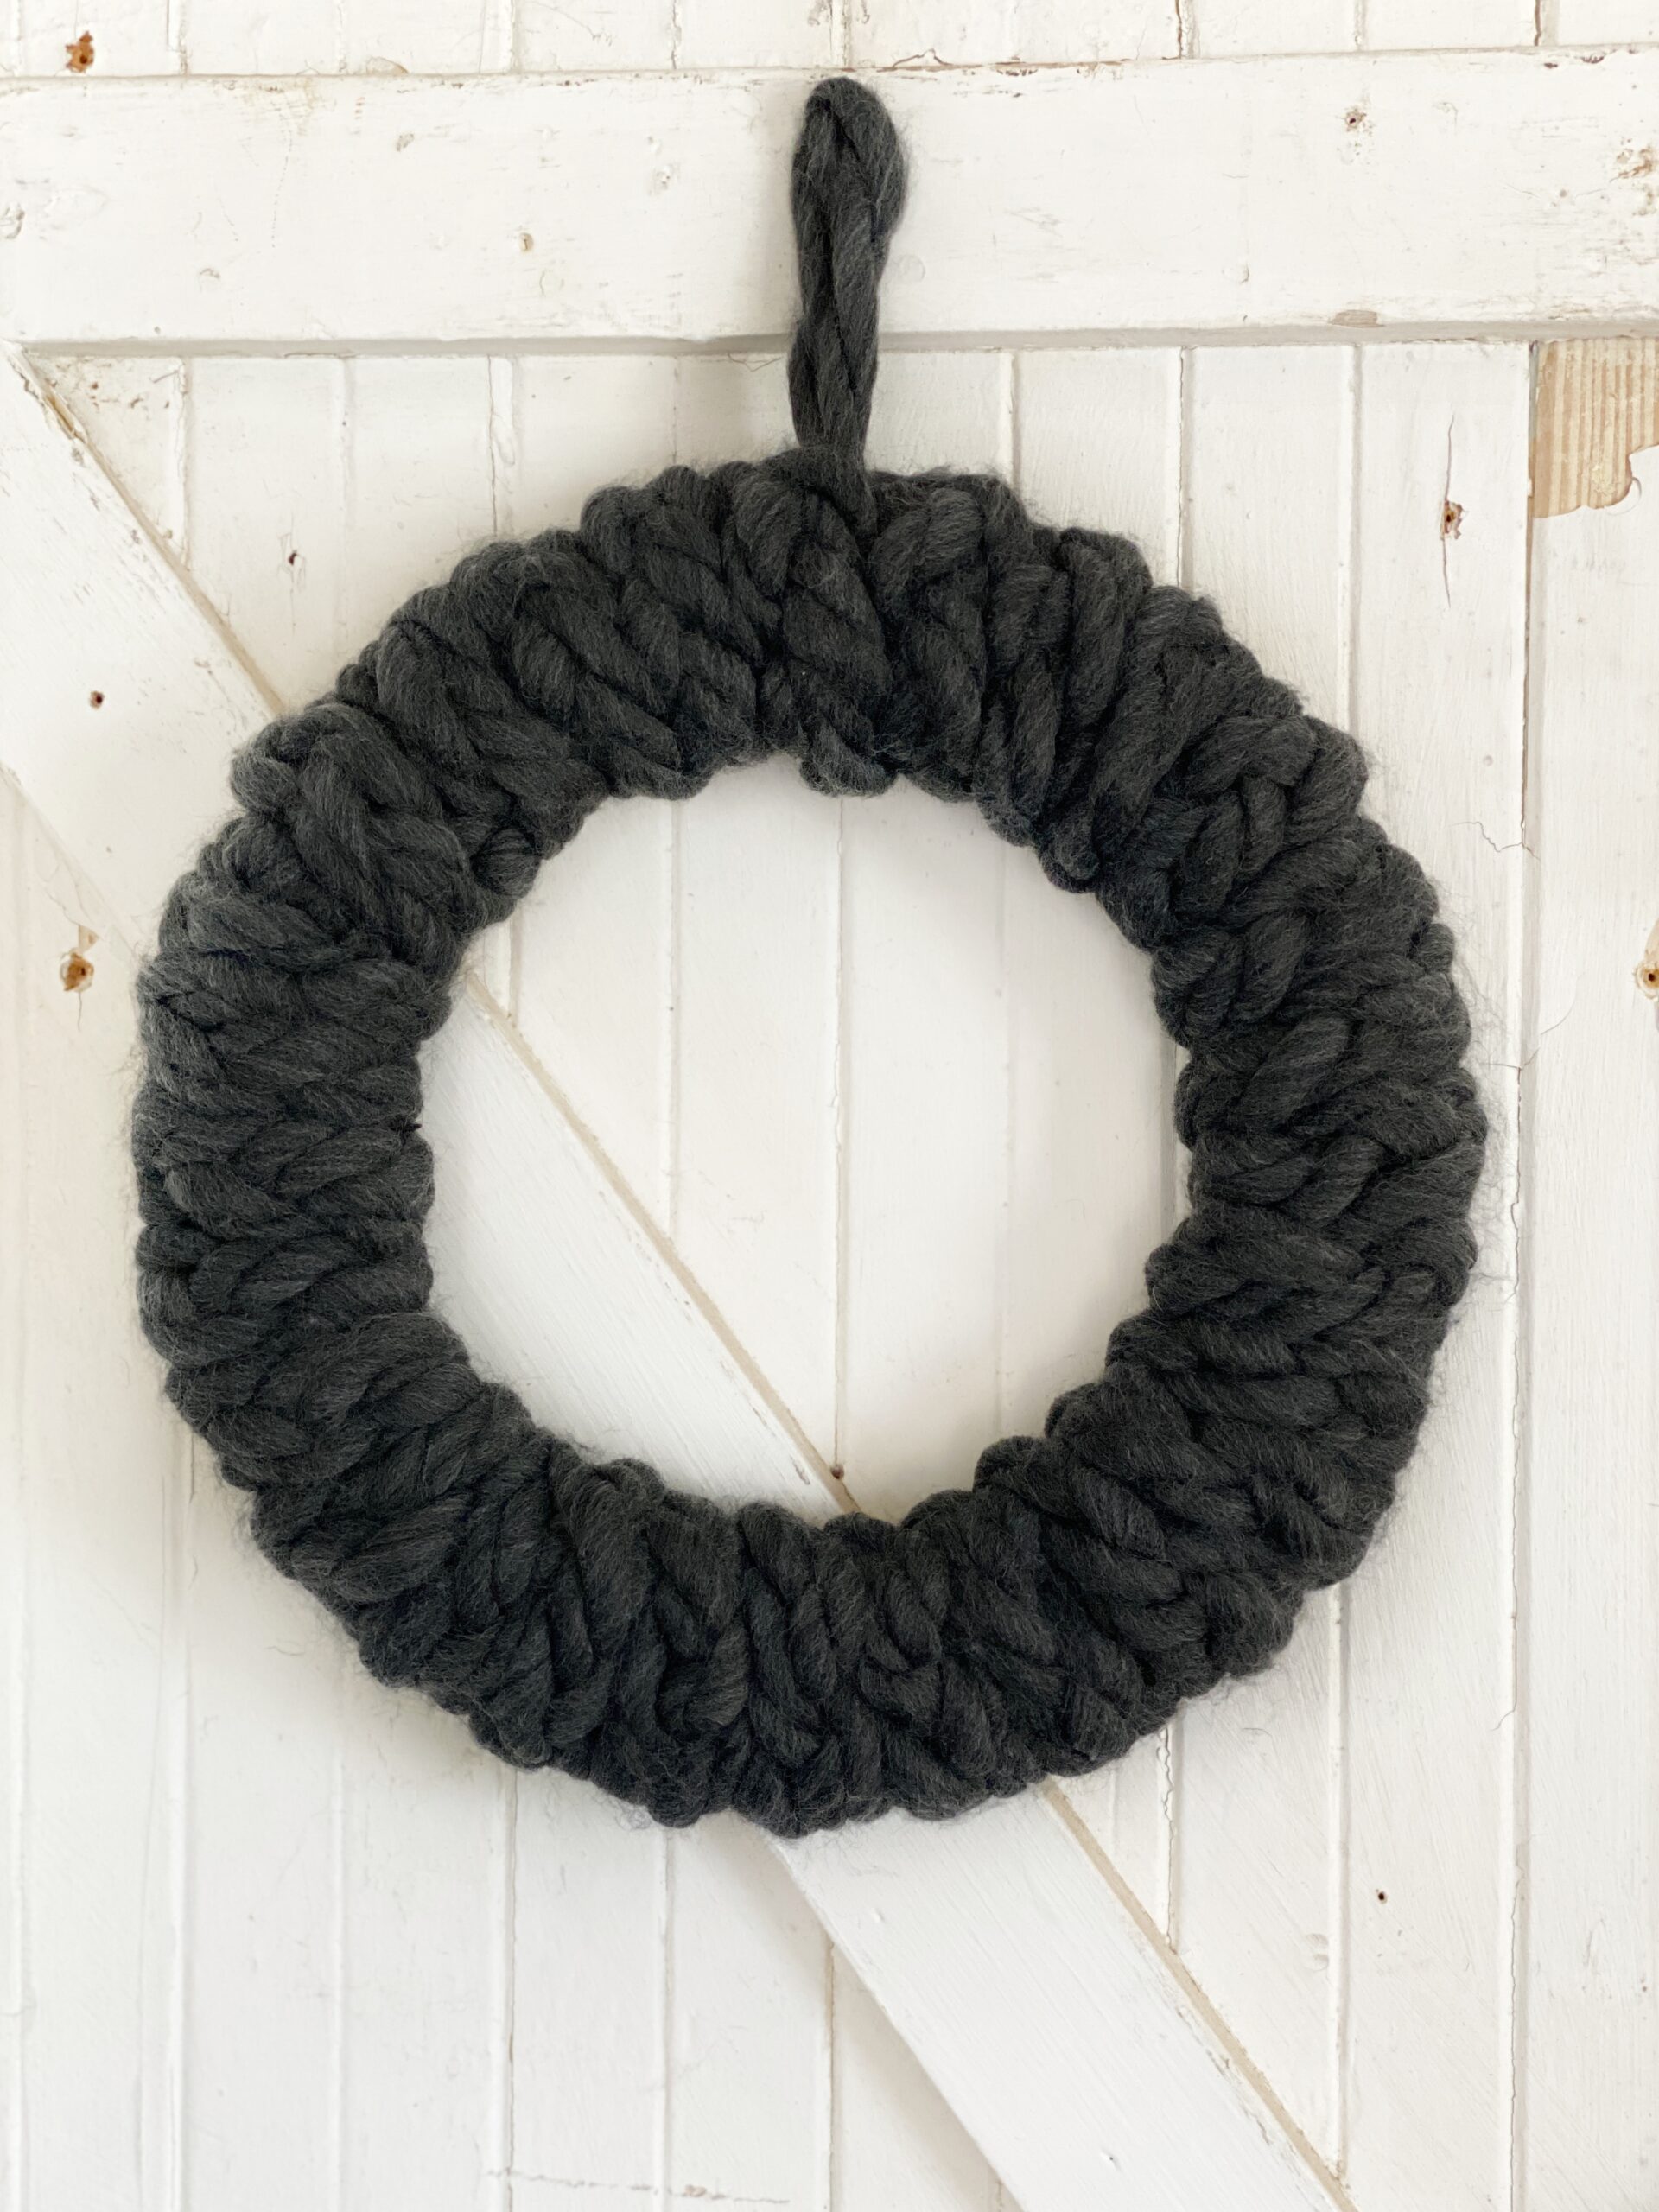 How To Make An Easy DIY Chunky Yarn Wreath